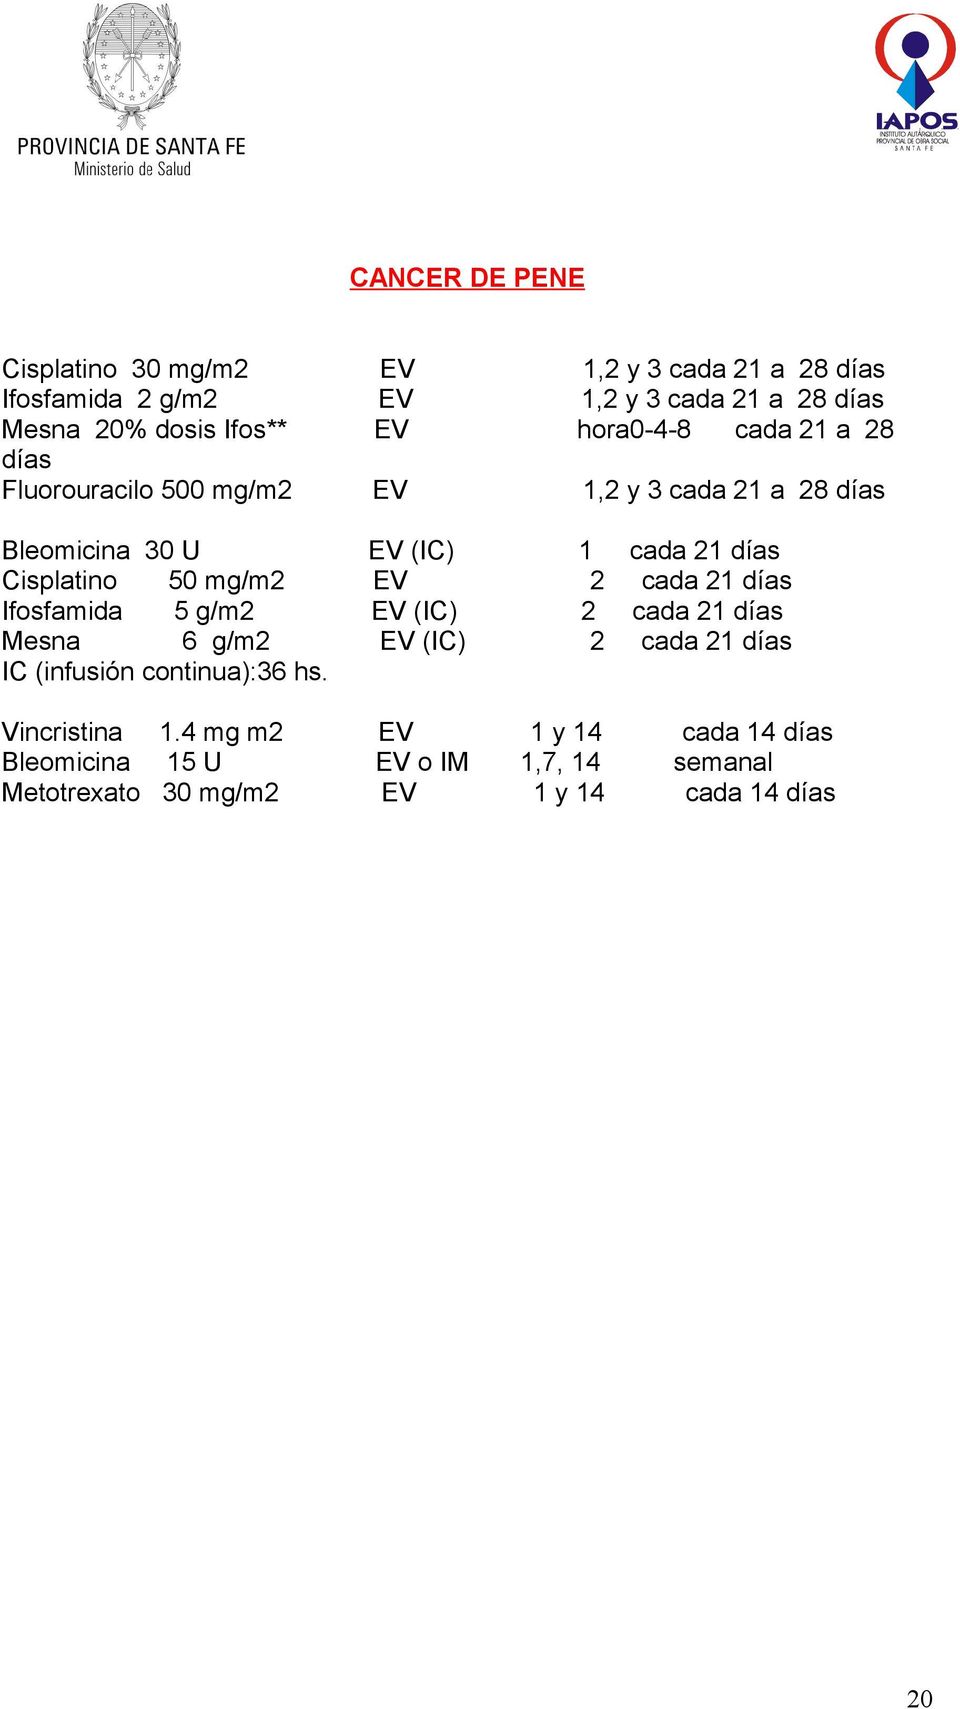 Cisplatino 50 mg/m2 EV 2 cada 21 Ifosfamida 5 g/m2 EV (IC) 2 cada 21 Mesna 6 g/m2 EV (IC) 2 cada 21 IC (infusión